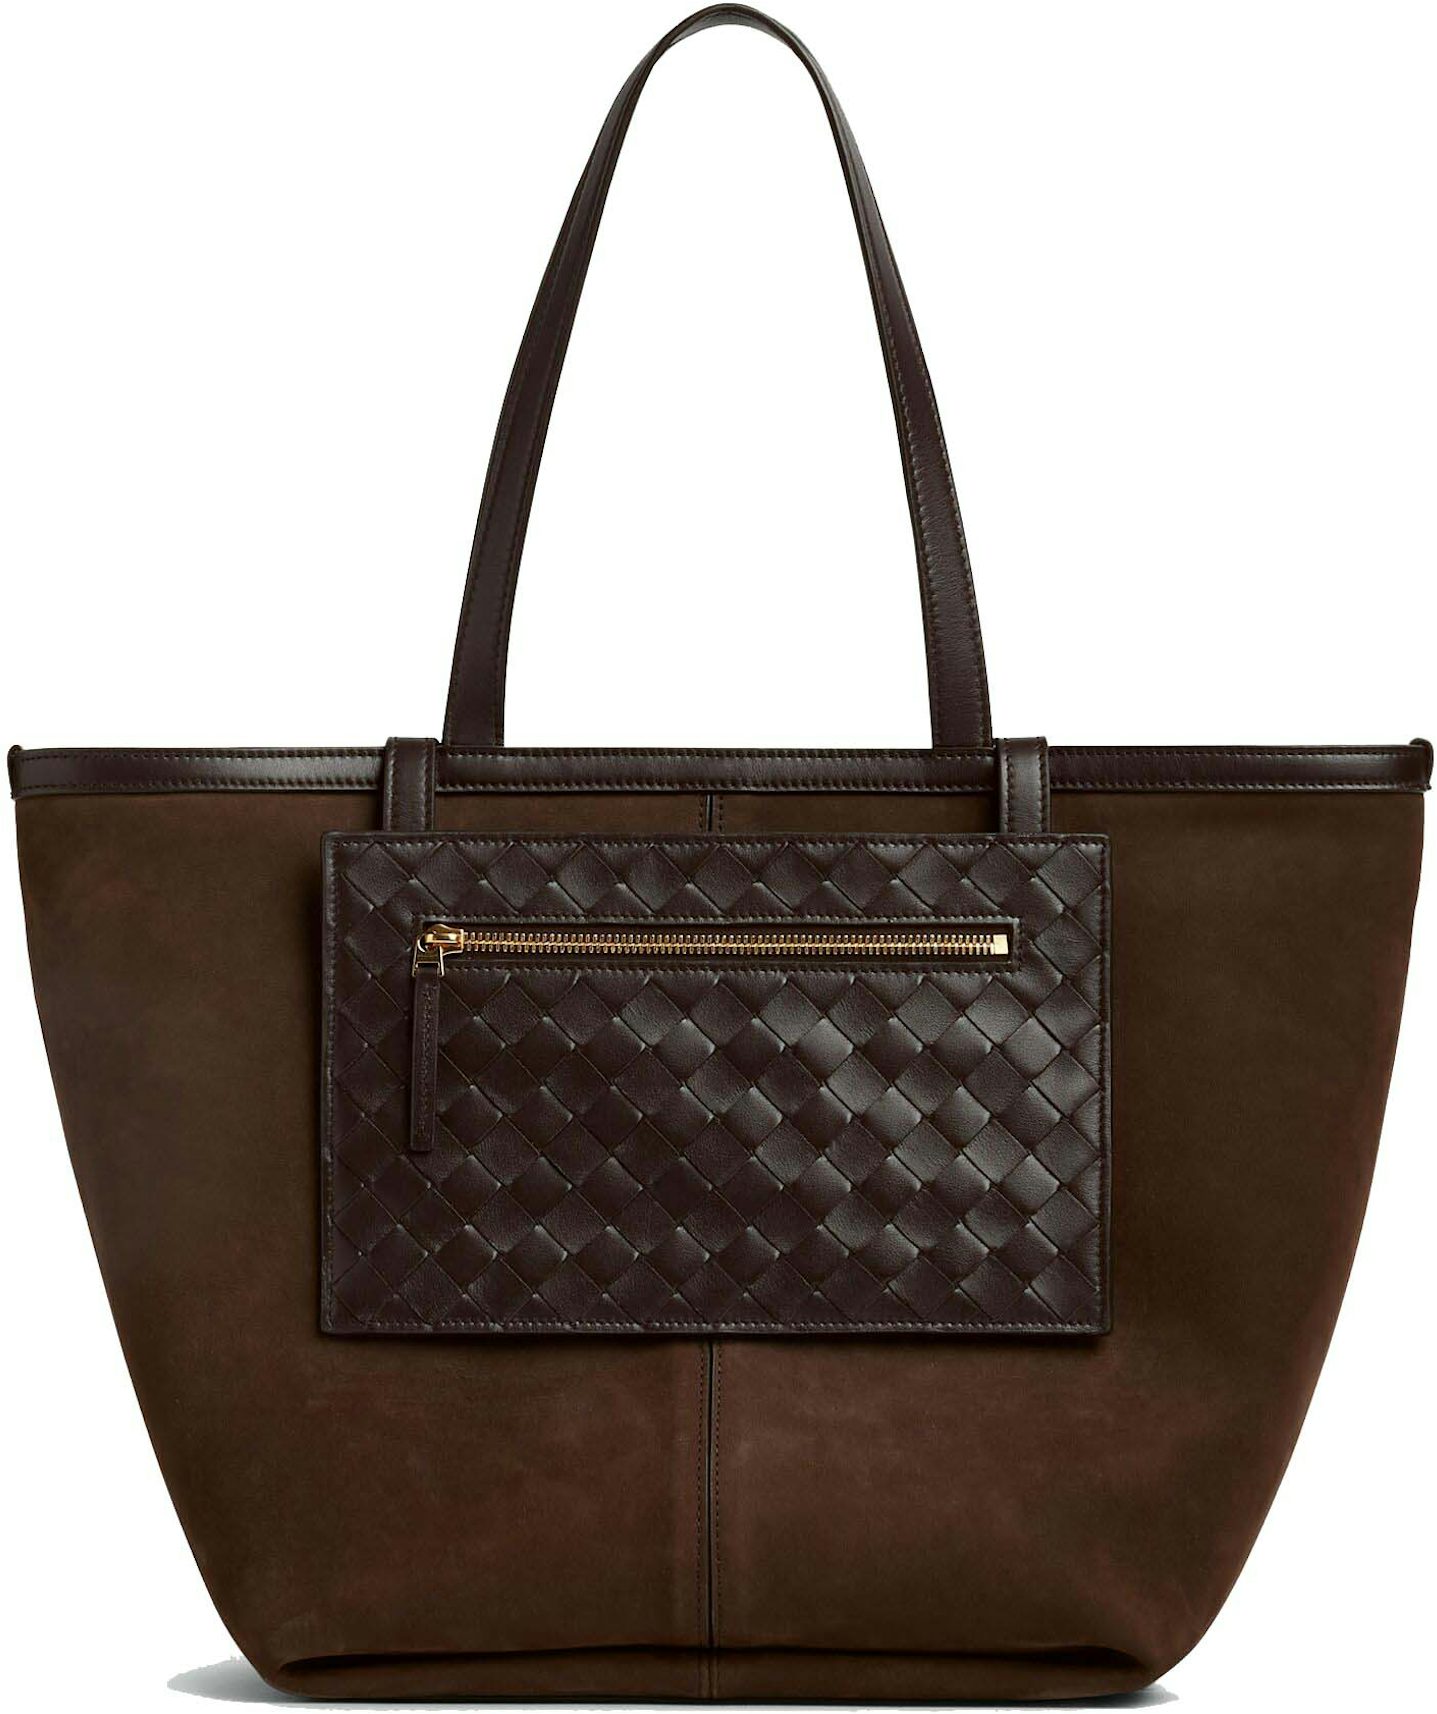 Bauletto Medium Leather Tote Bag in Brown - Bottega Veneta